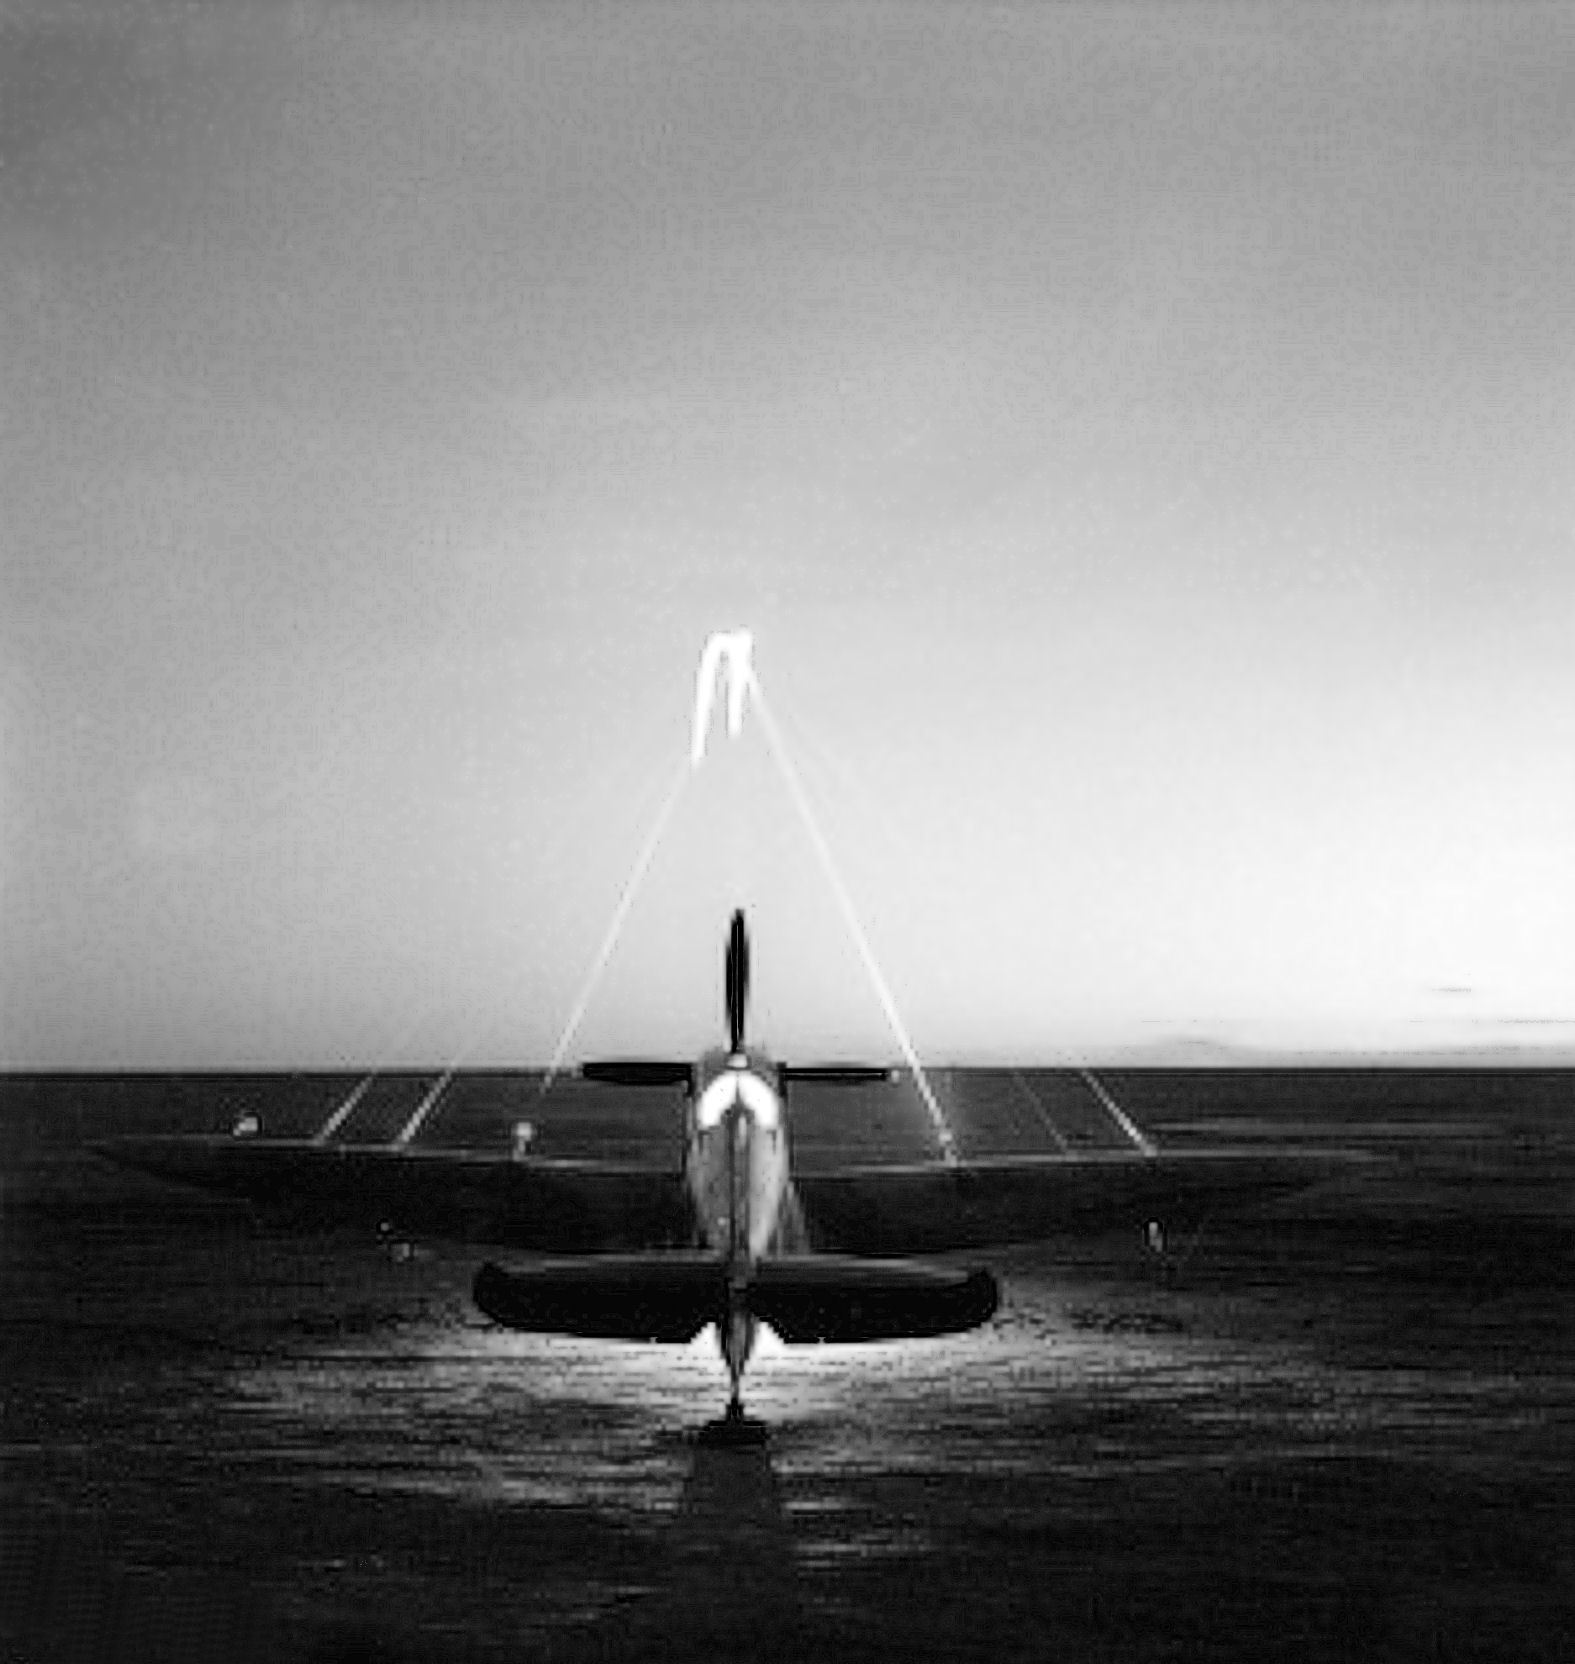 RAAF_Supermarine_Spitfire_451Sqn_cannons_blazing_ranged_-_300yds_El_Daba_Eg